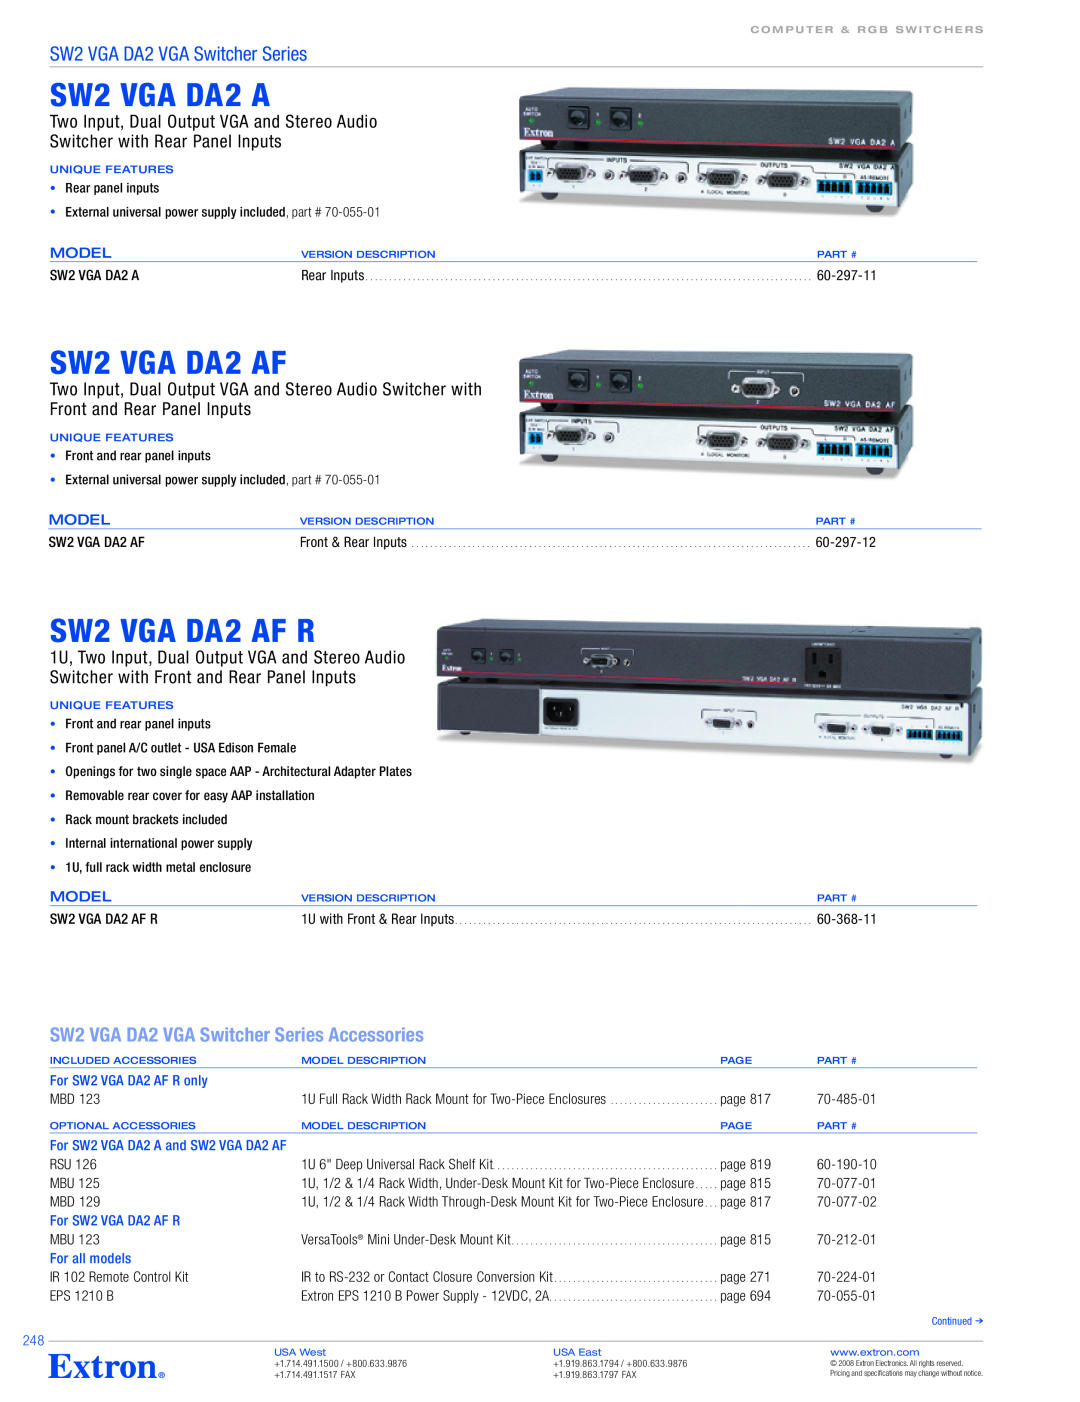 Extron electronic SW2 VGA Series SW2 VGA DA2 AF R, SW2 VGA DA2 VGA Switcher Series, Front and Rear Panel Inputs 